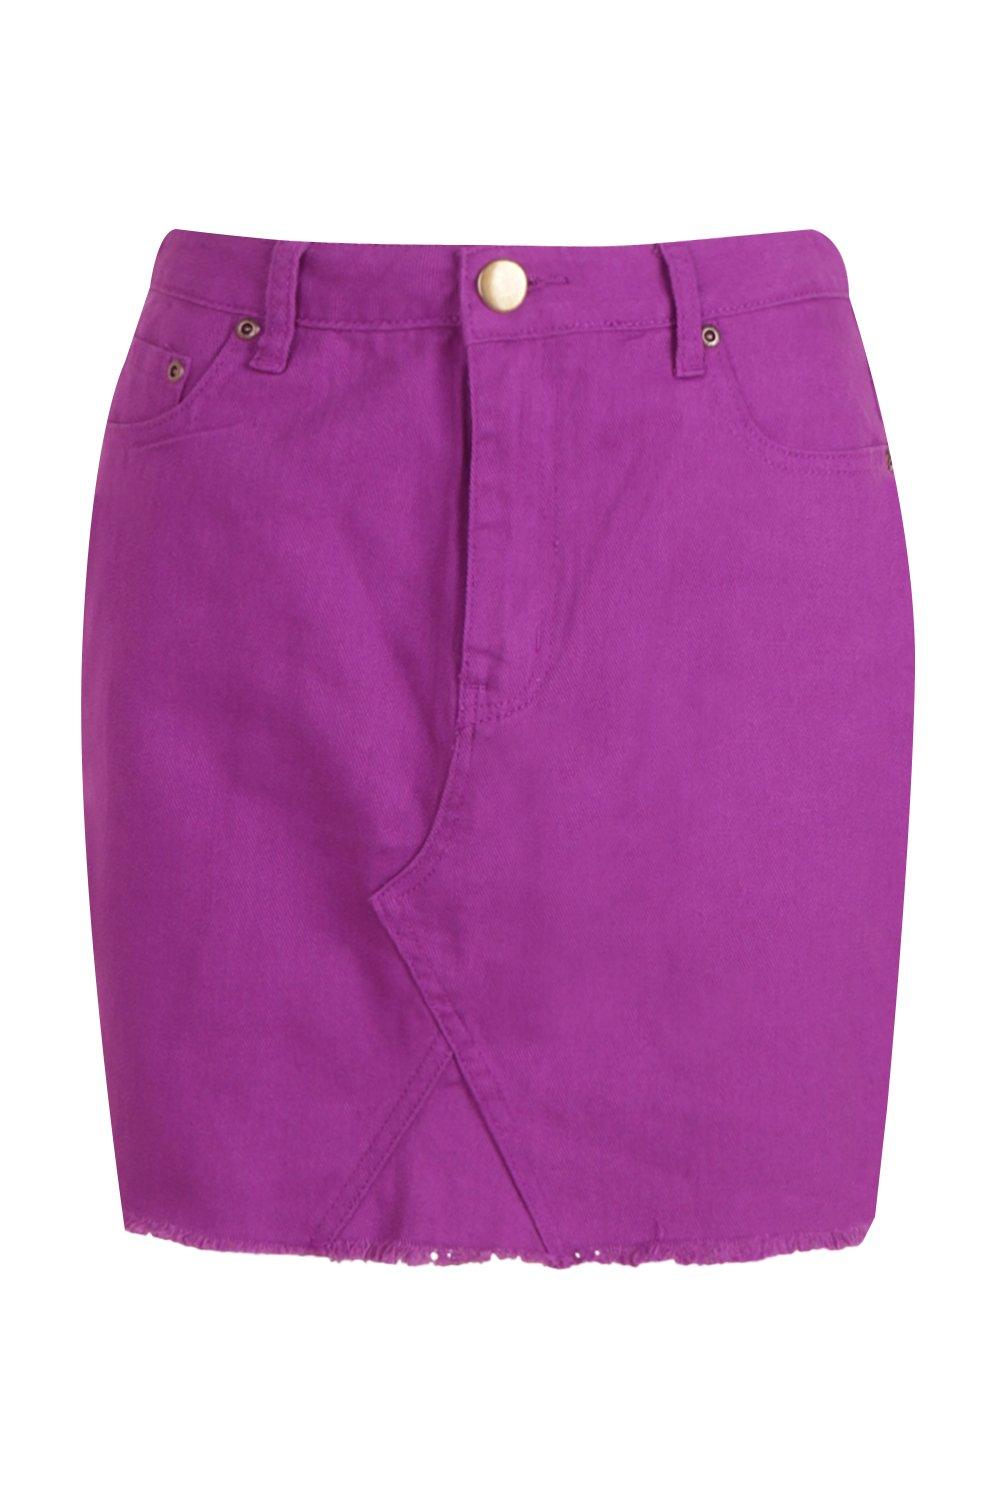 dark purple denim skirt